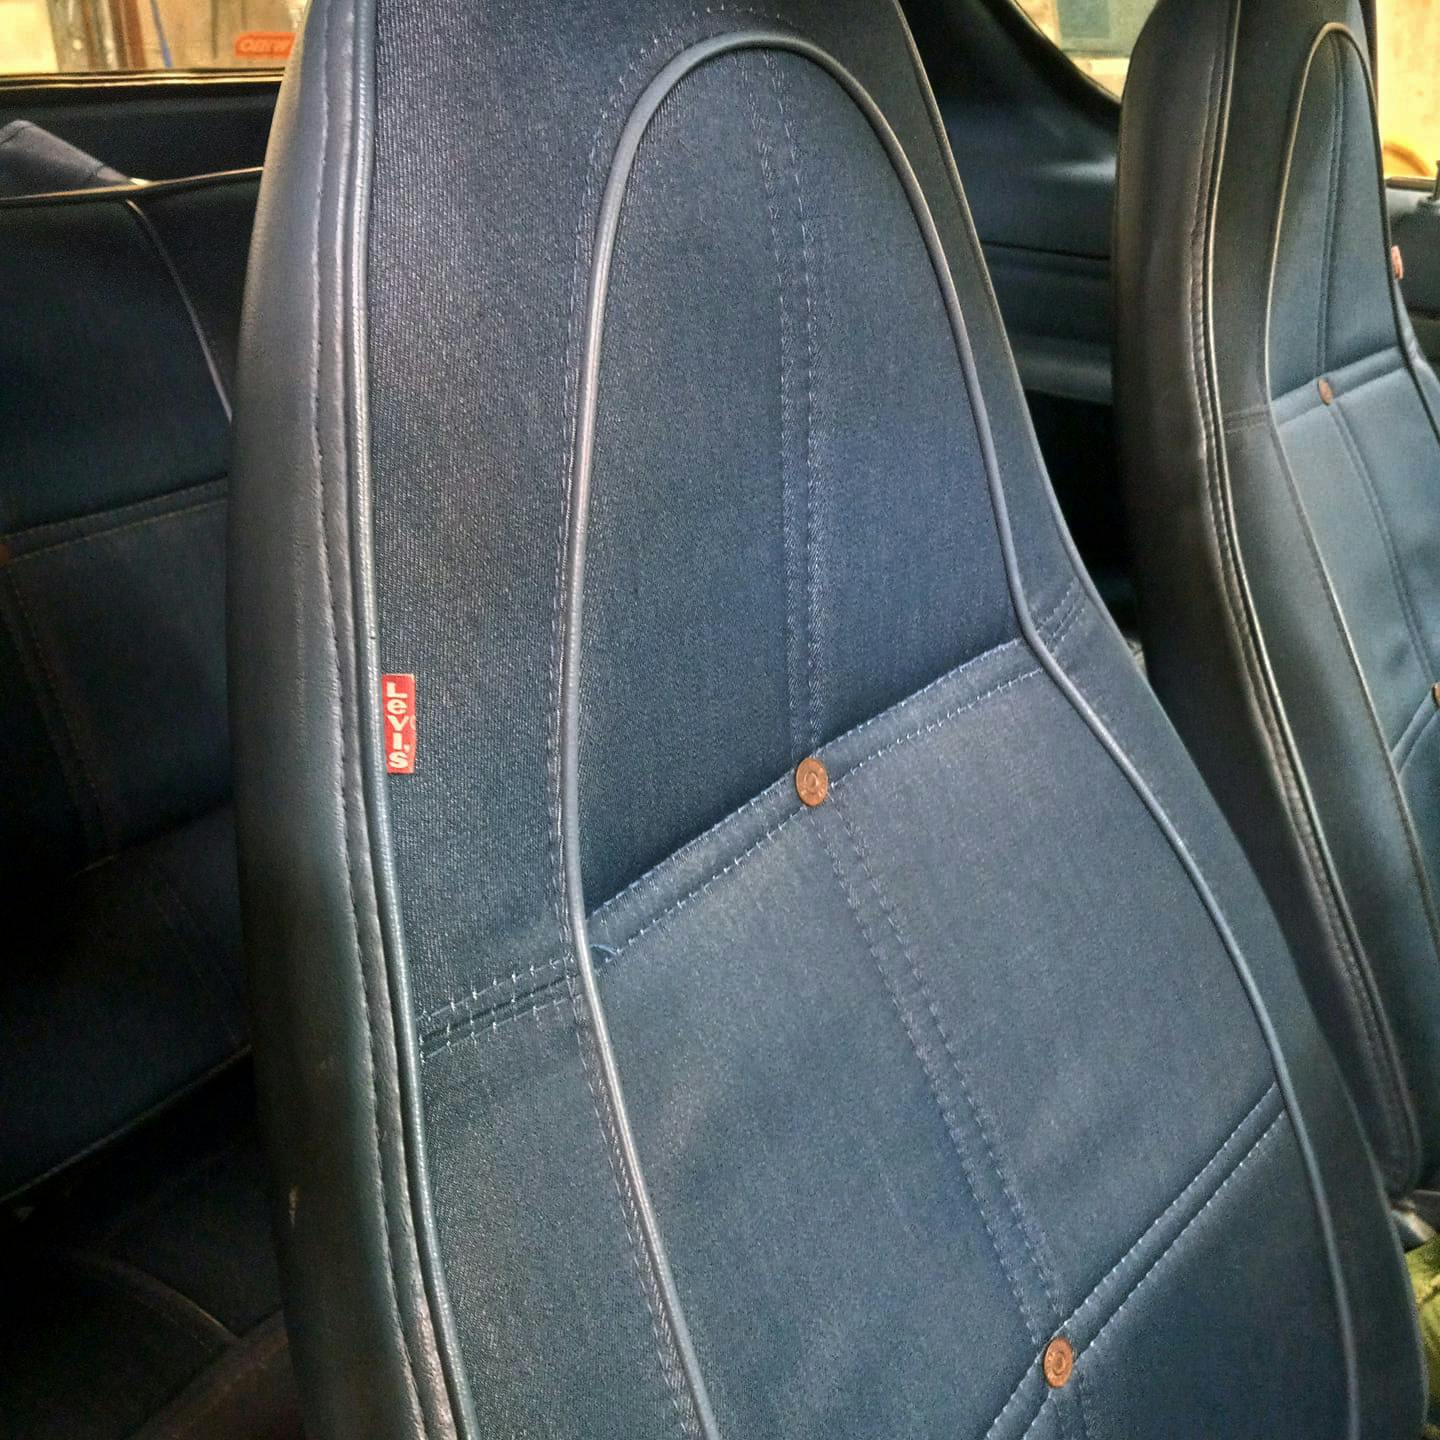 AMC Levis Gremlin interior denim seatback closeup